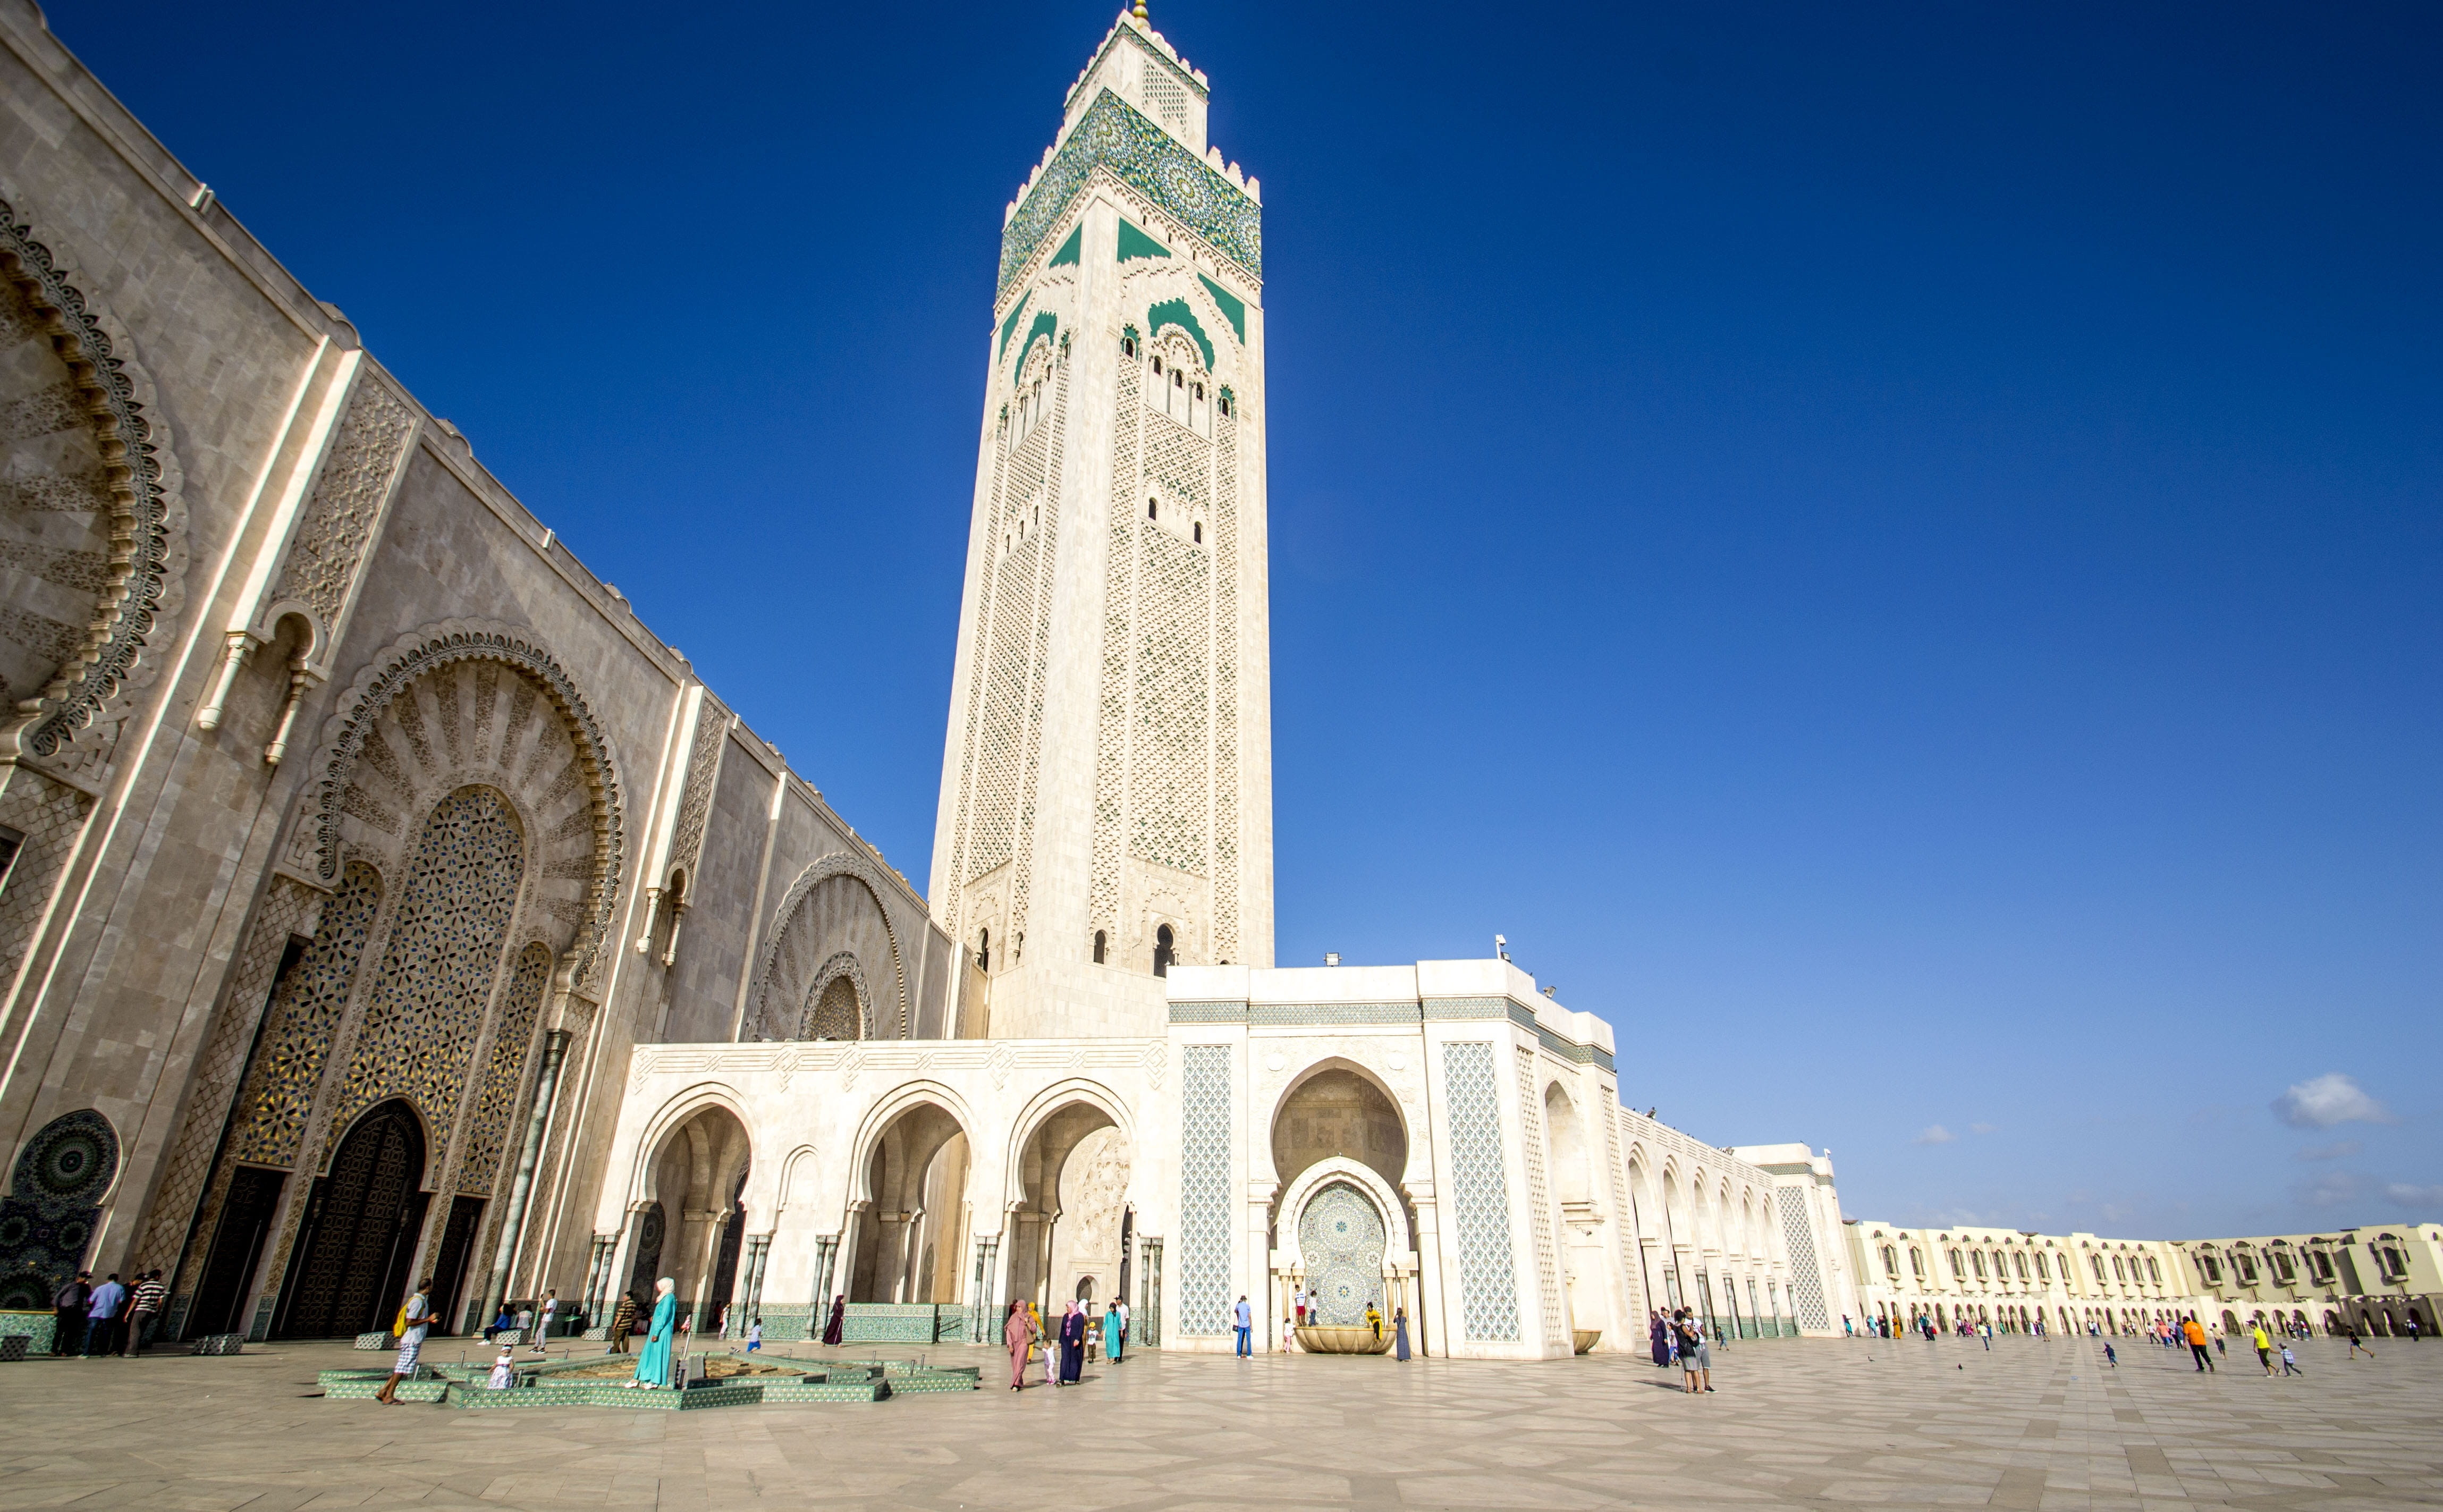 Mosque, Hassan, Casablanca, Morocco, mosque hassan 2, architecture